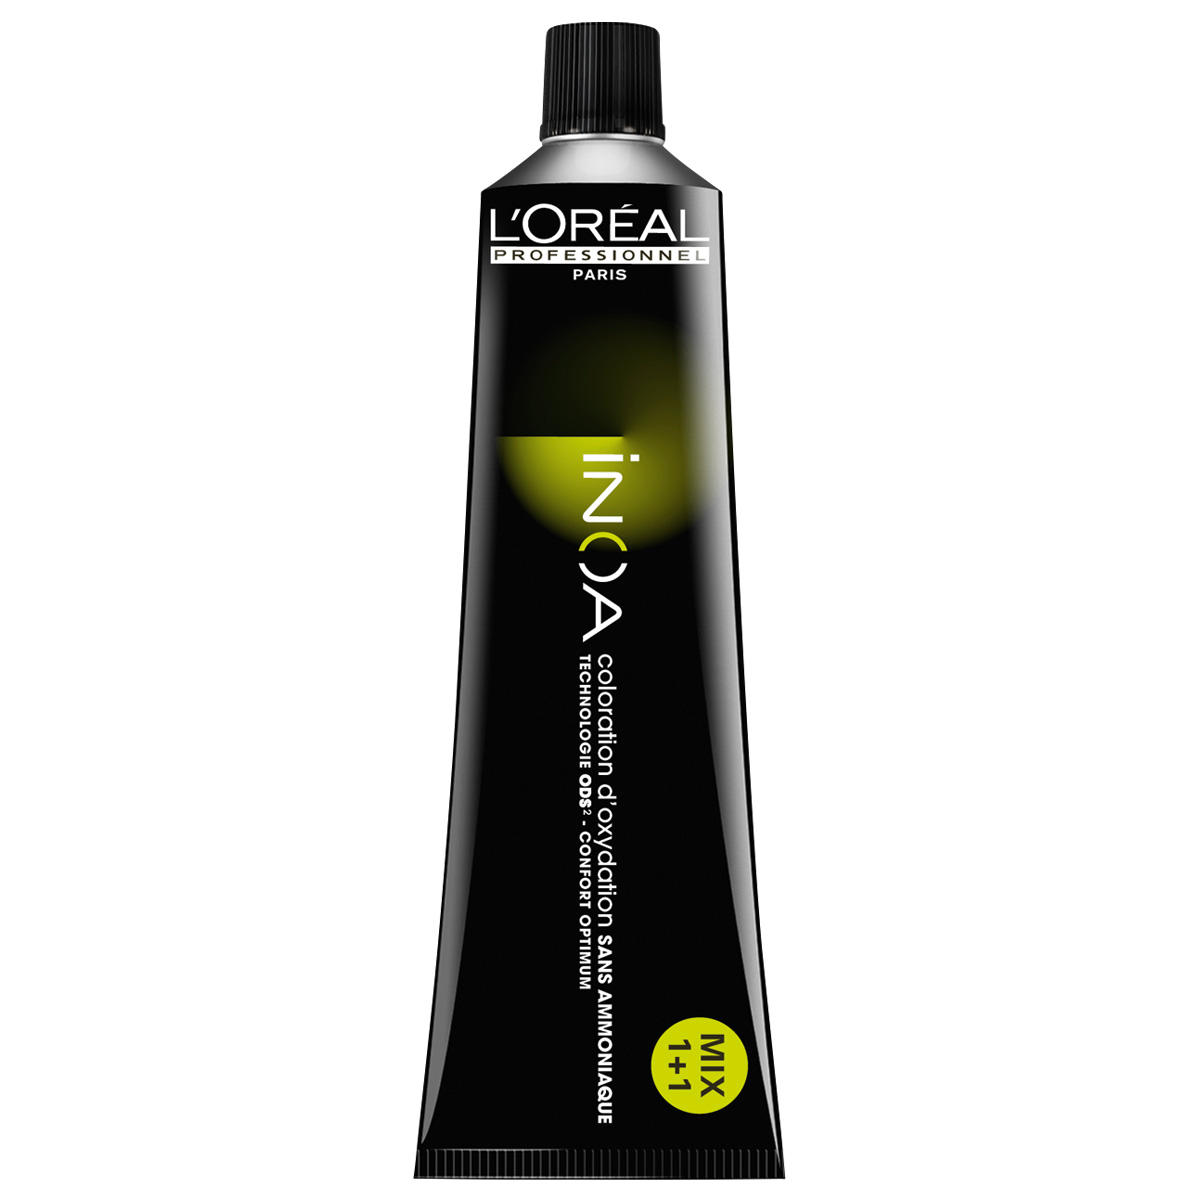 L'Oréal Professionnel Paris Coloration 5.8 Marrón claro moca, tubo 60 ml - 1